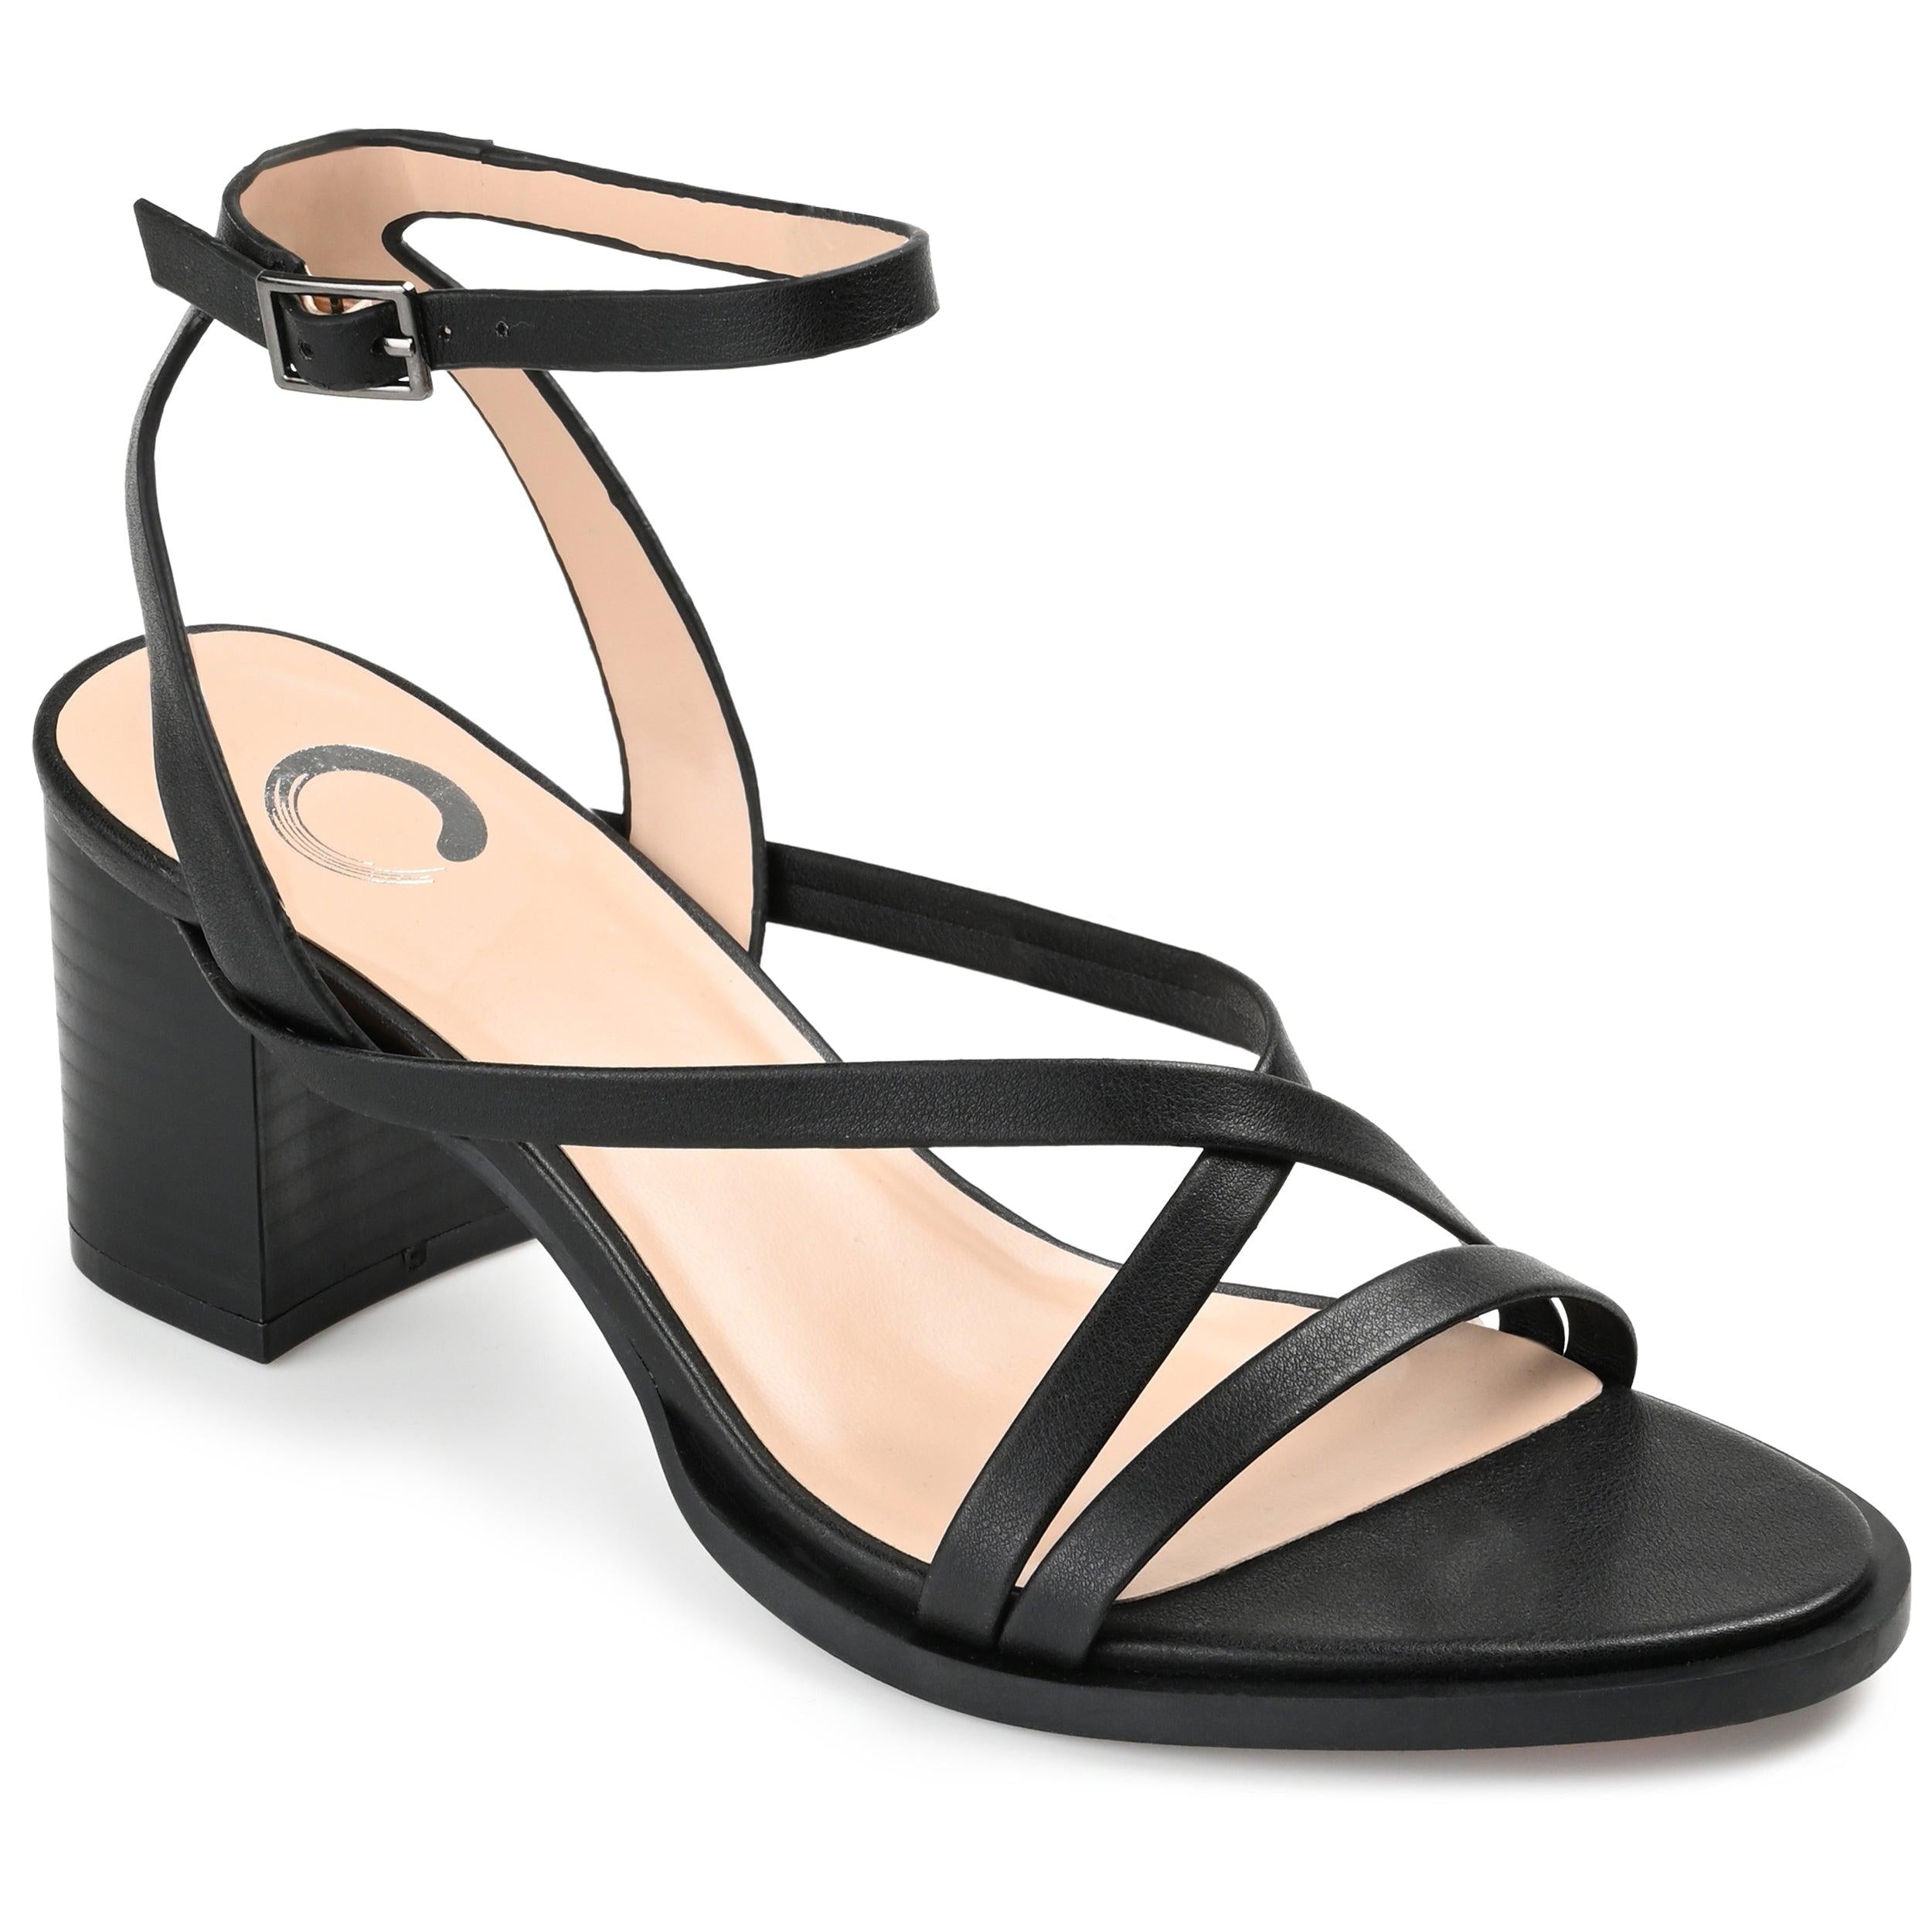 Aldo Zelicia Pumps 7.5 Women's Strappy Heels Shoes Tie front Stilletos  Pointy | Strappy heels, Heels, Shoes heels